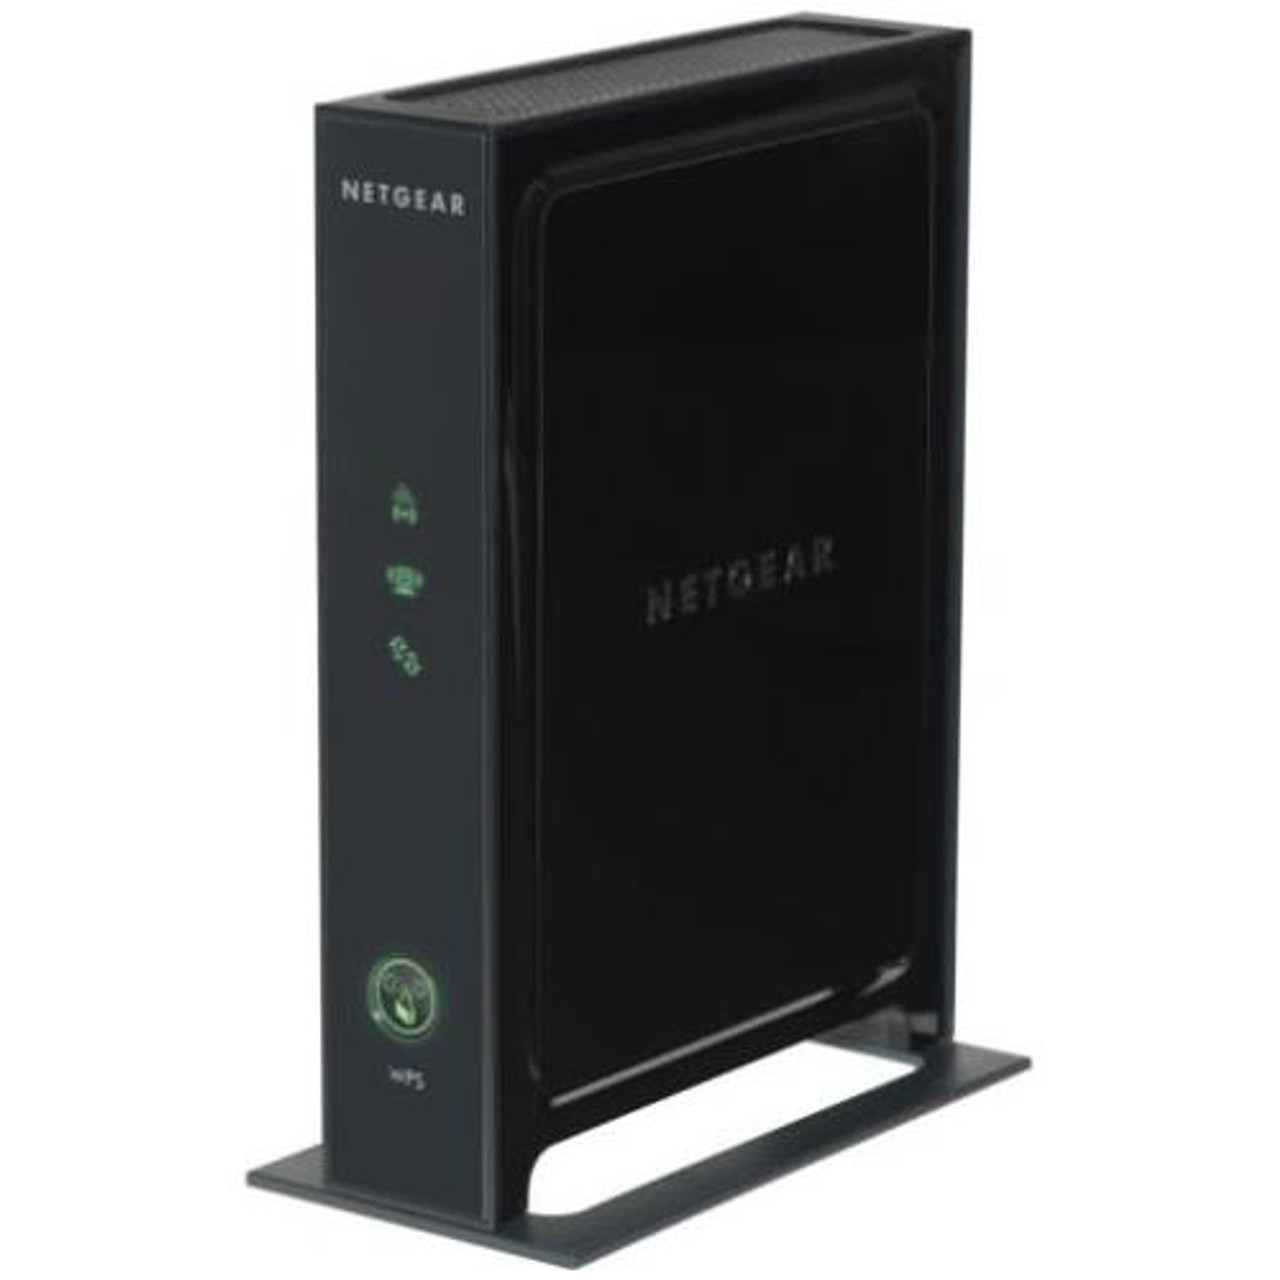 WN2000RPT-200NAS NetGear N300 Wifi Range Extender - Version (Refurbished)